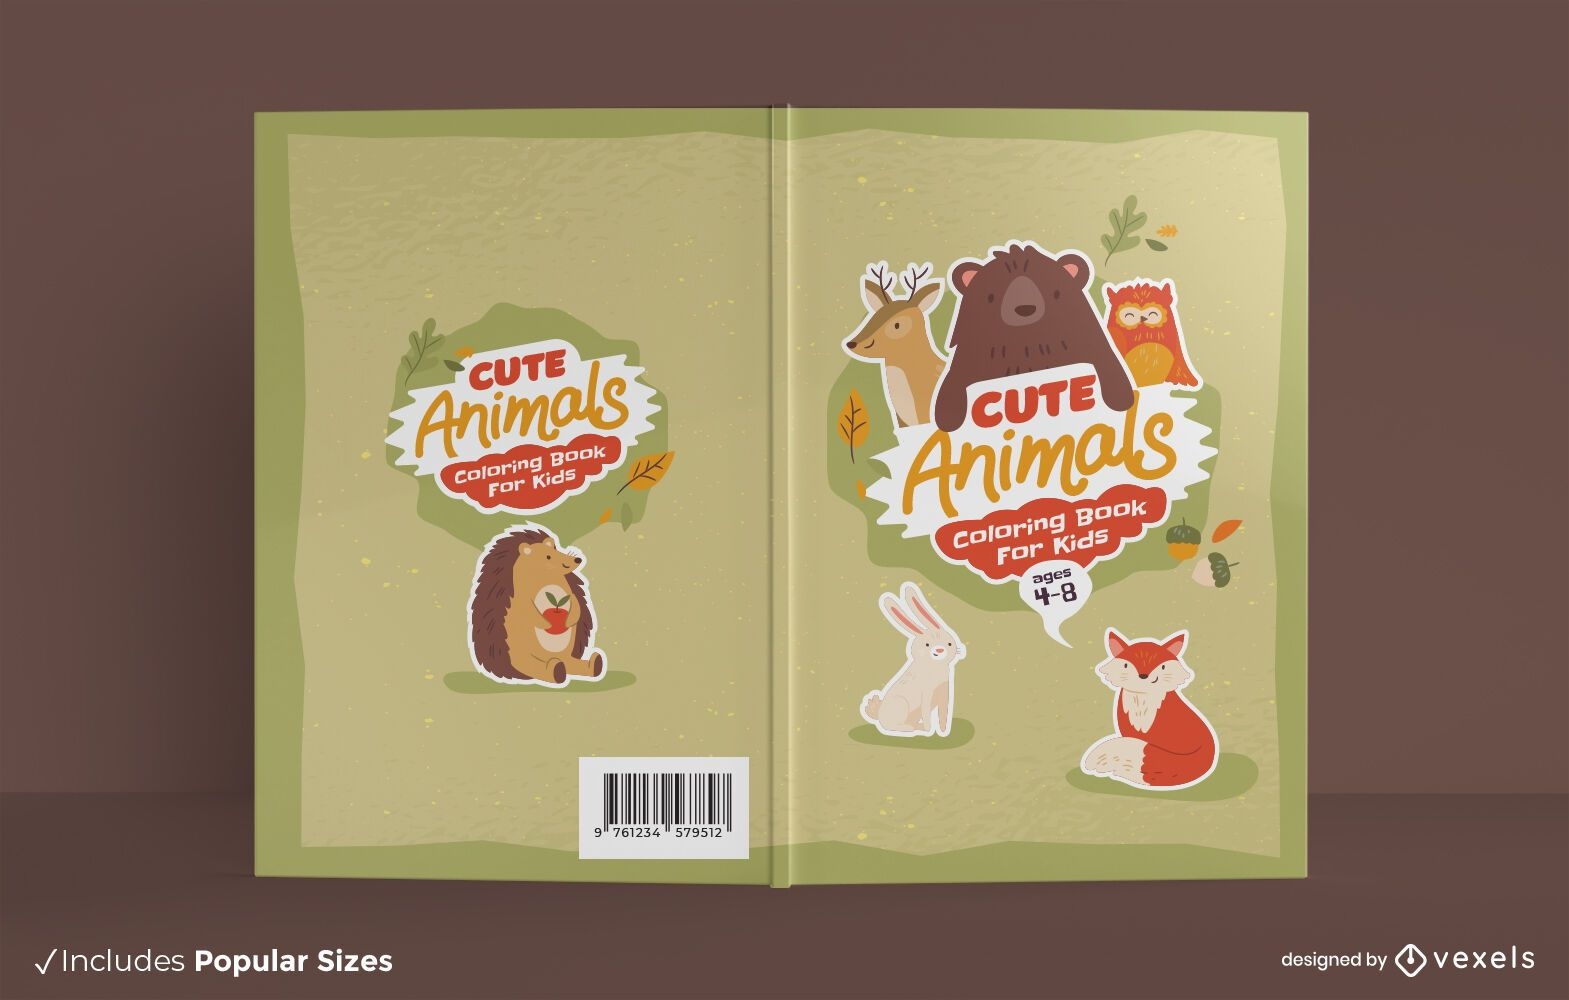 Cute wild animals coloring book cover design